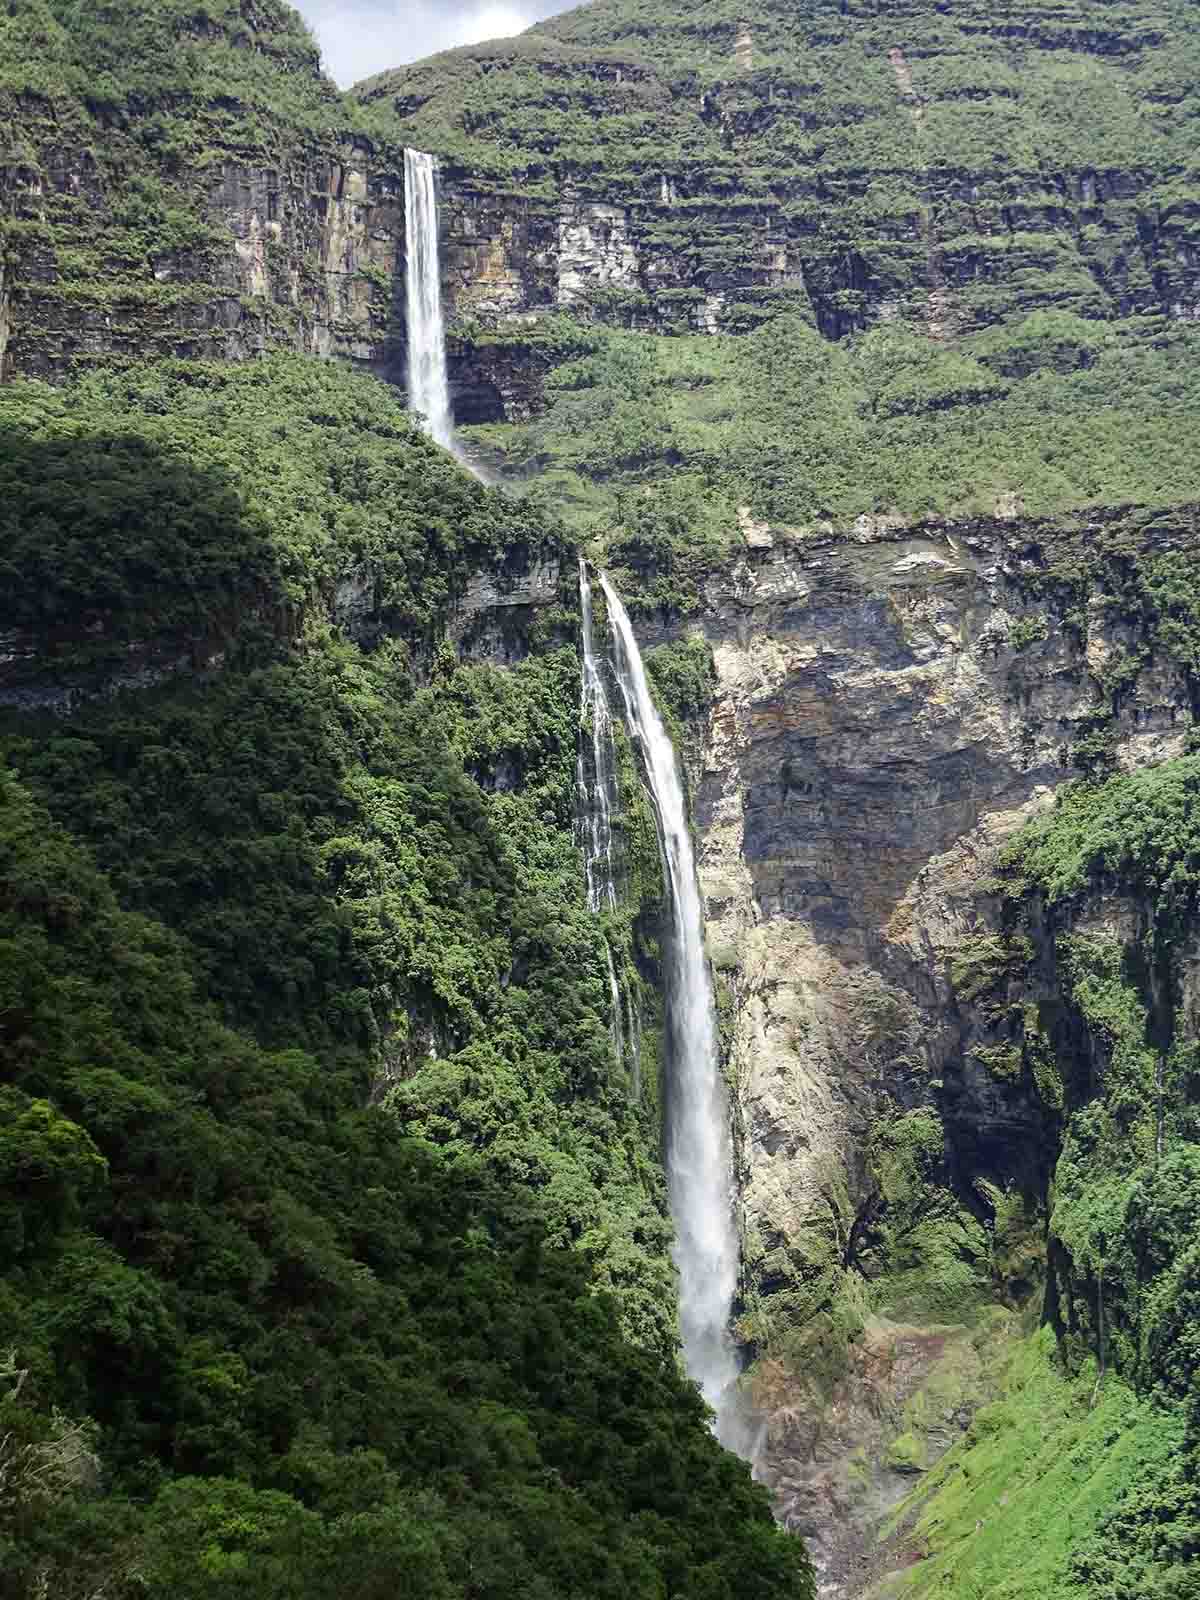 Two drops of one waterfall, the Gocta Waterfall, in Peru.